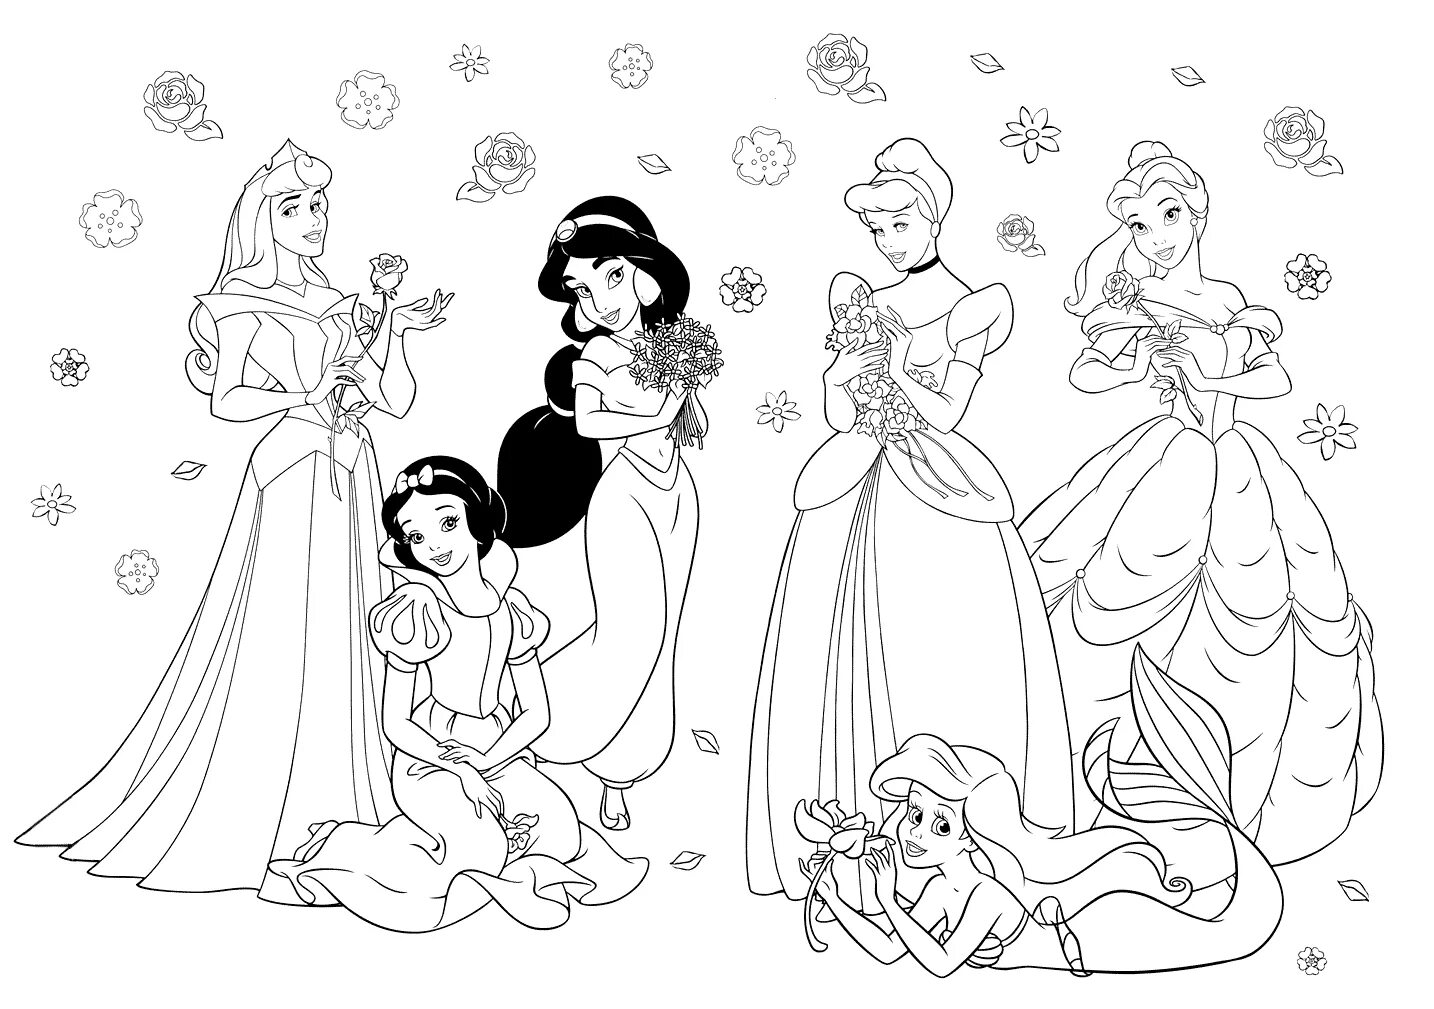 Princesses in one file #14